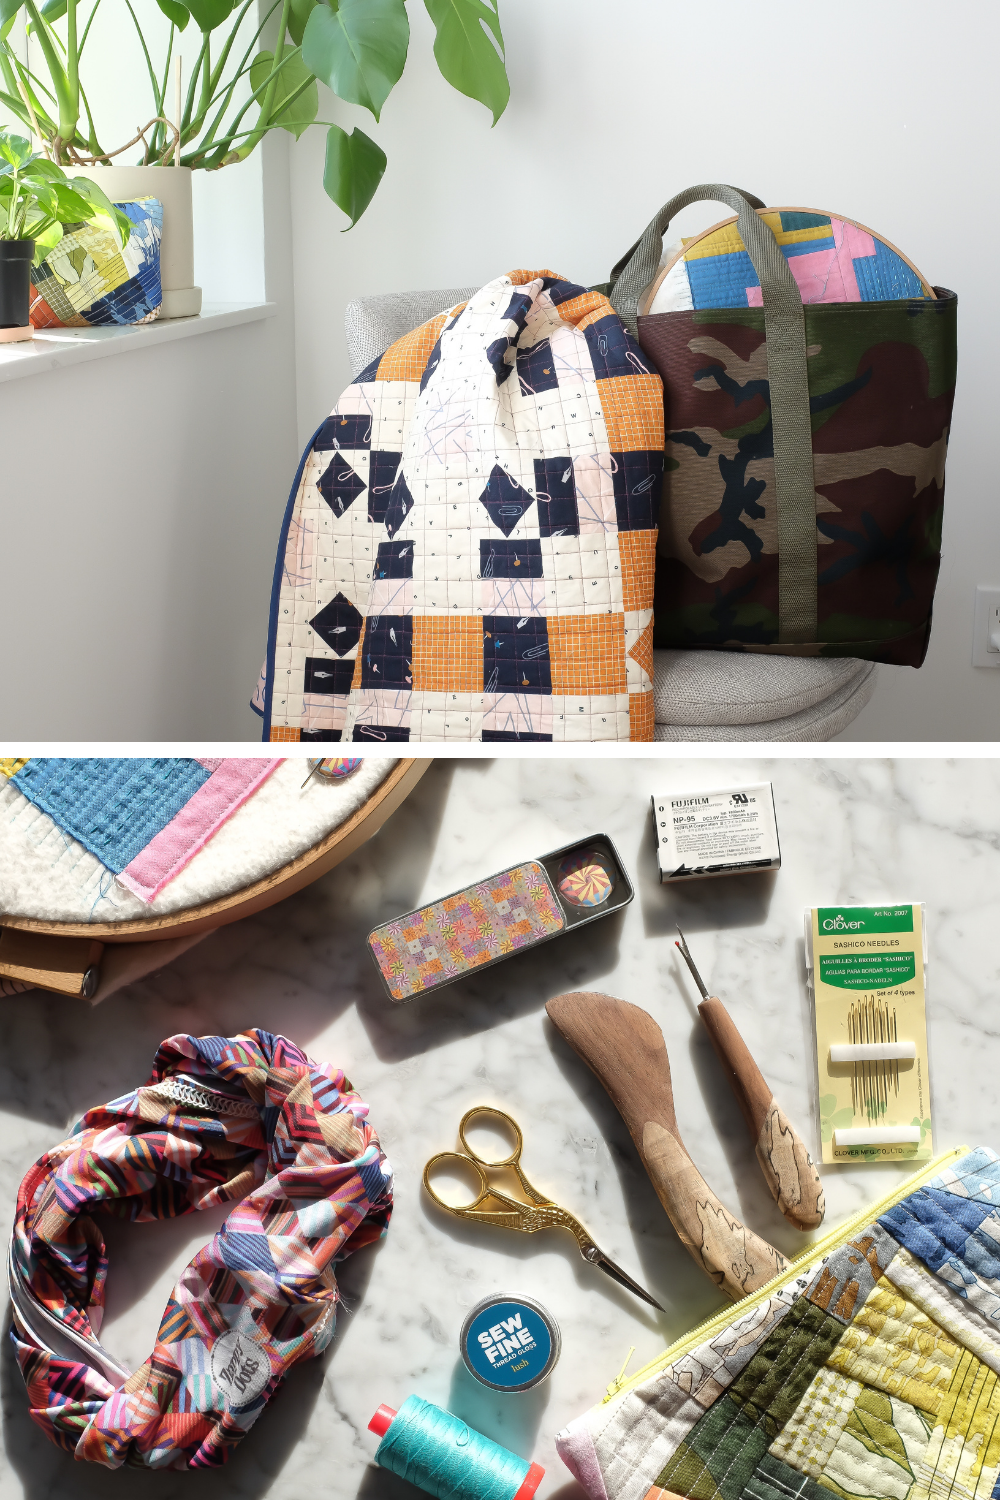 Jmd Allstar Small Sewing Kit for Beginners, & Smart Girls